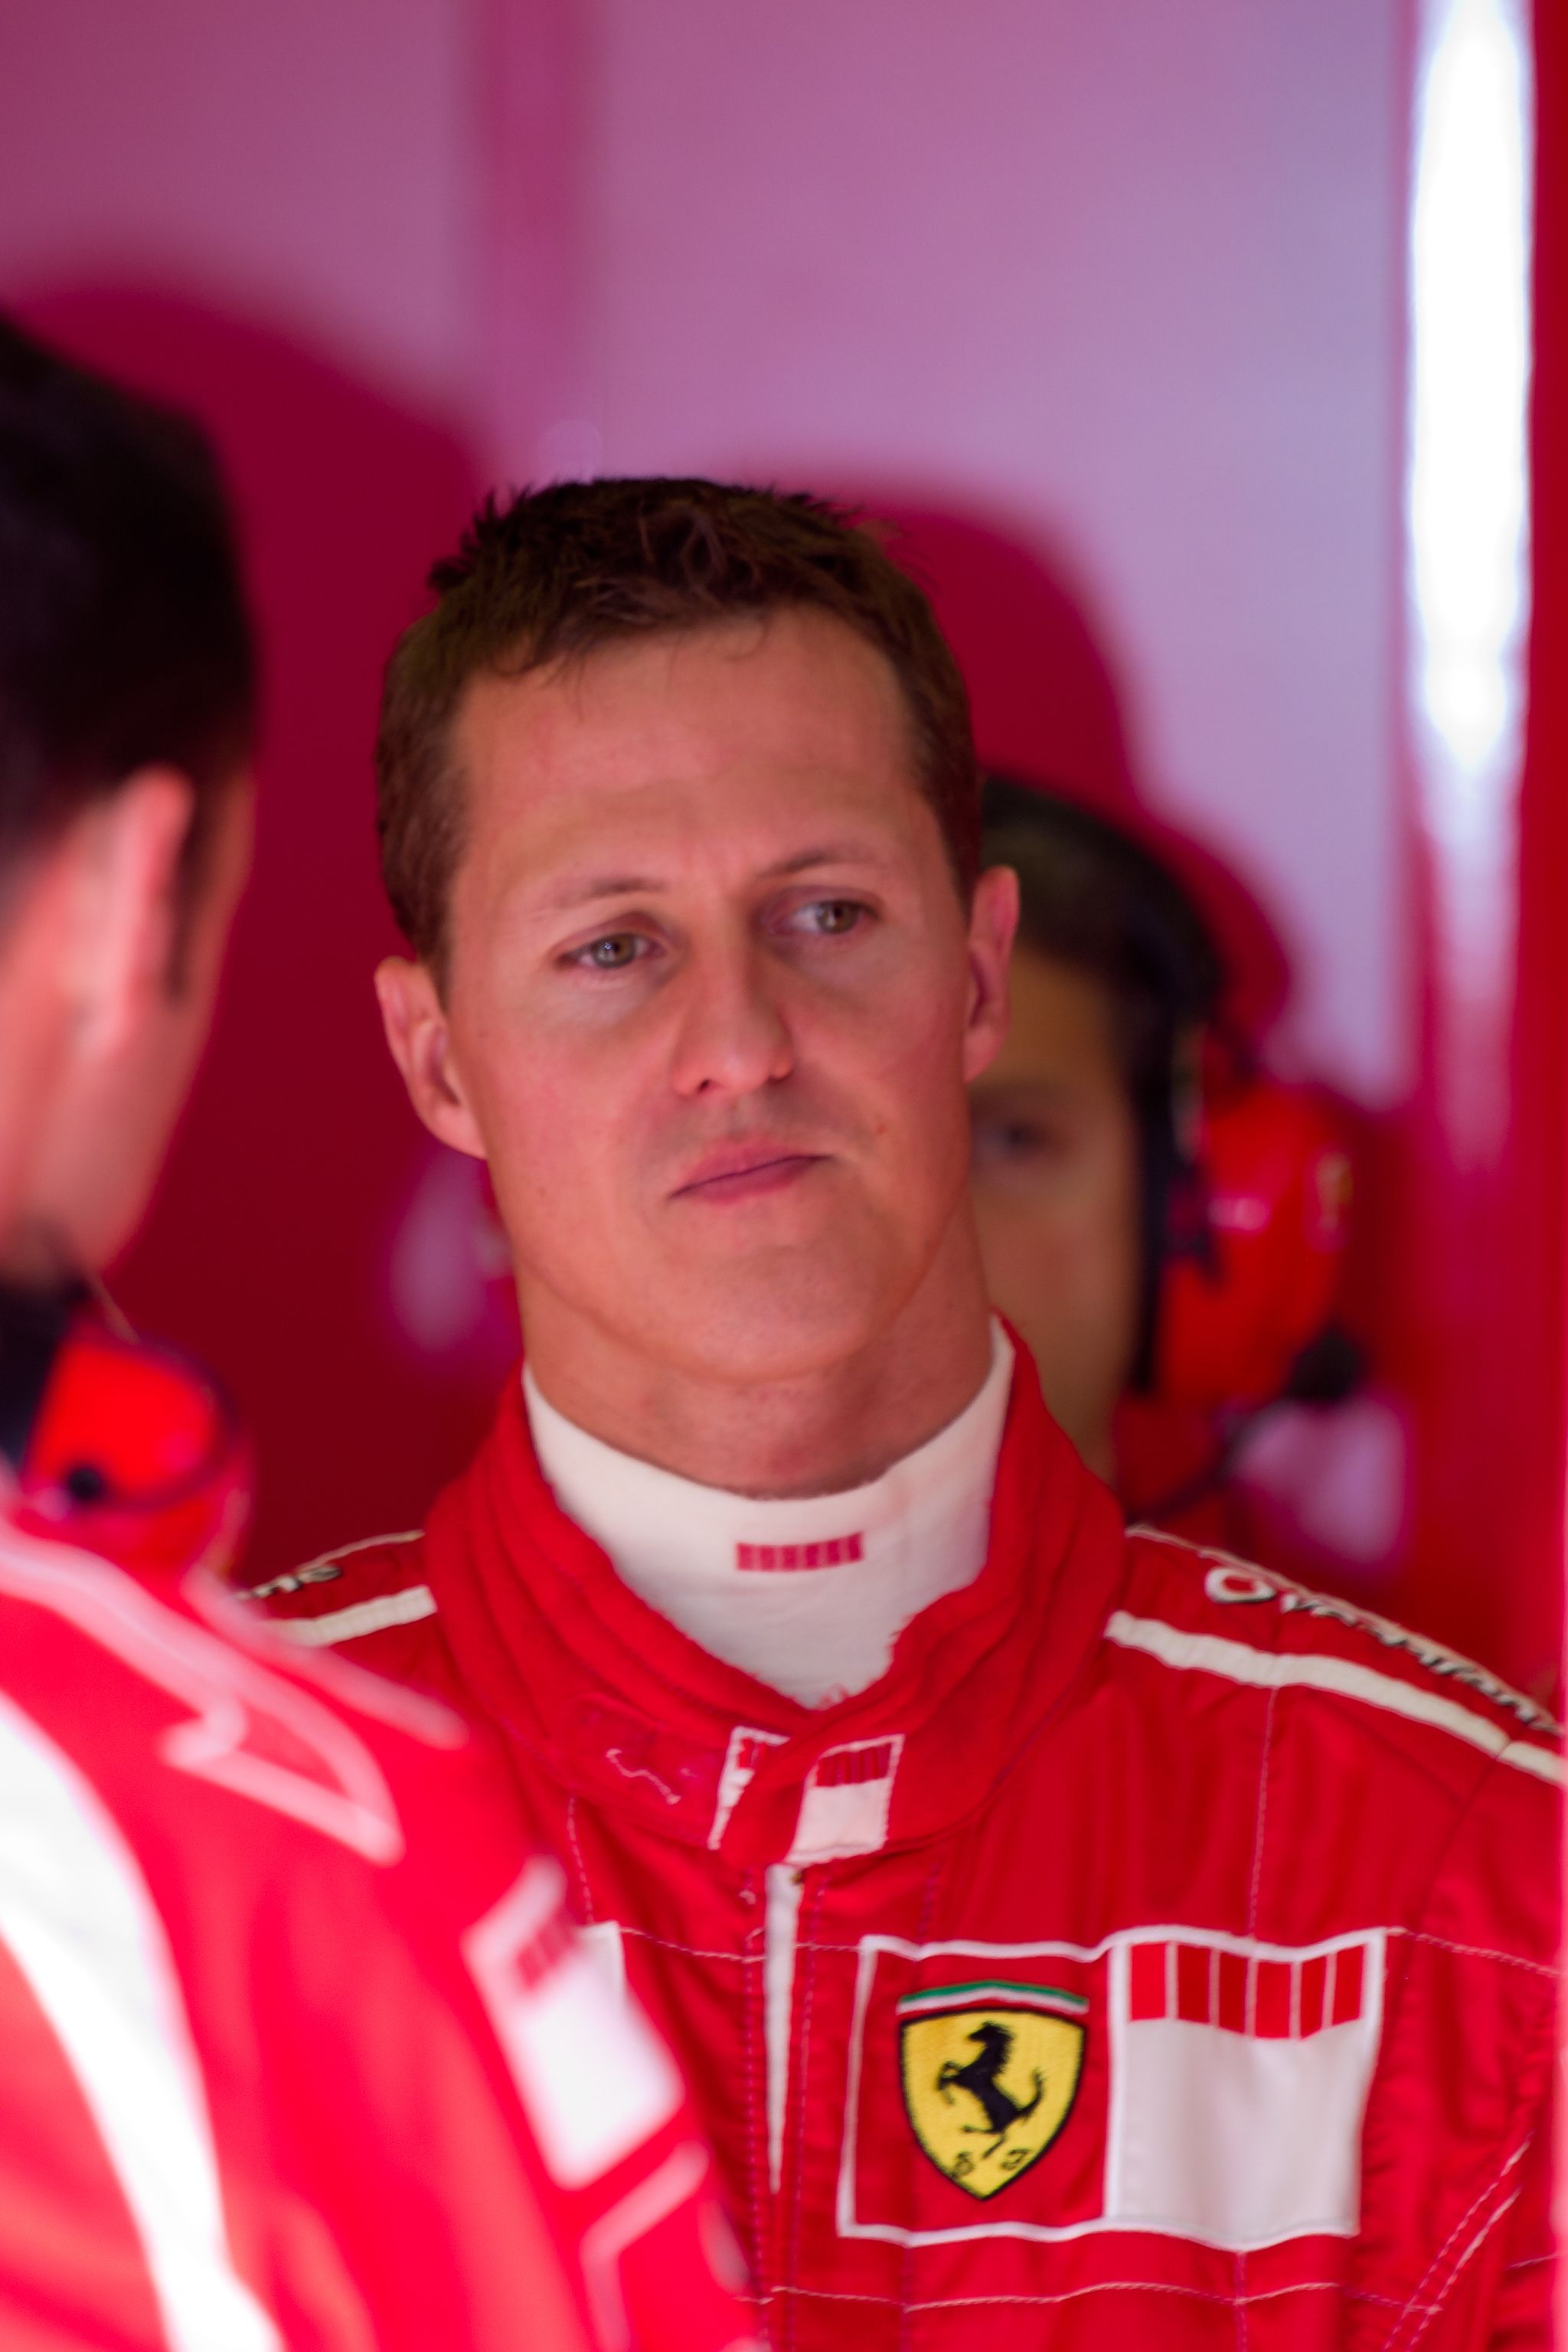 Michael Schumacher wears a red race car driver outfit.